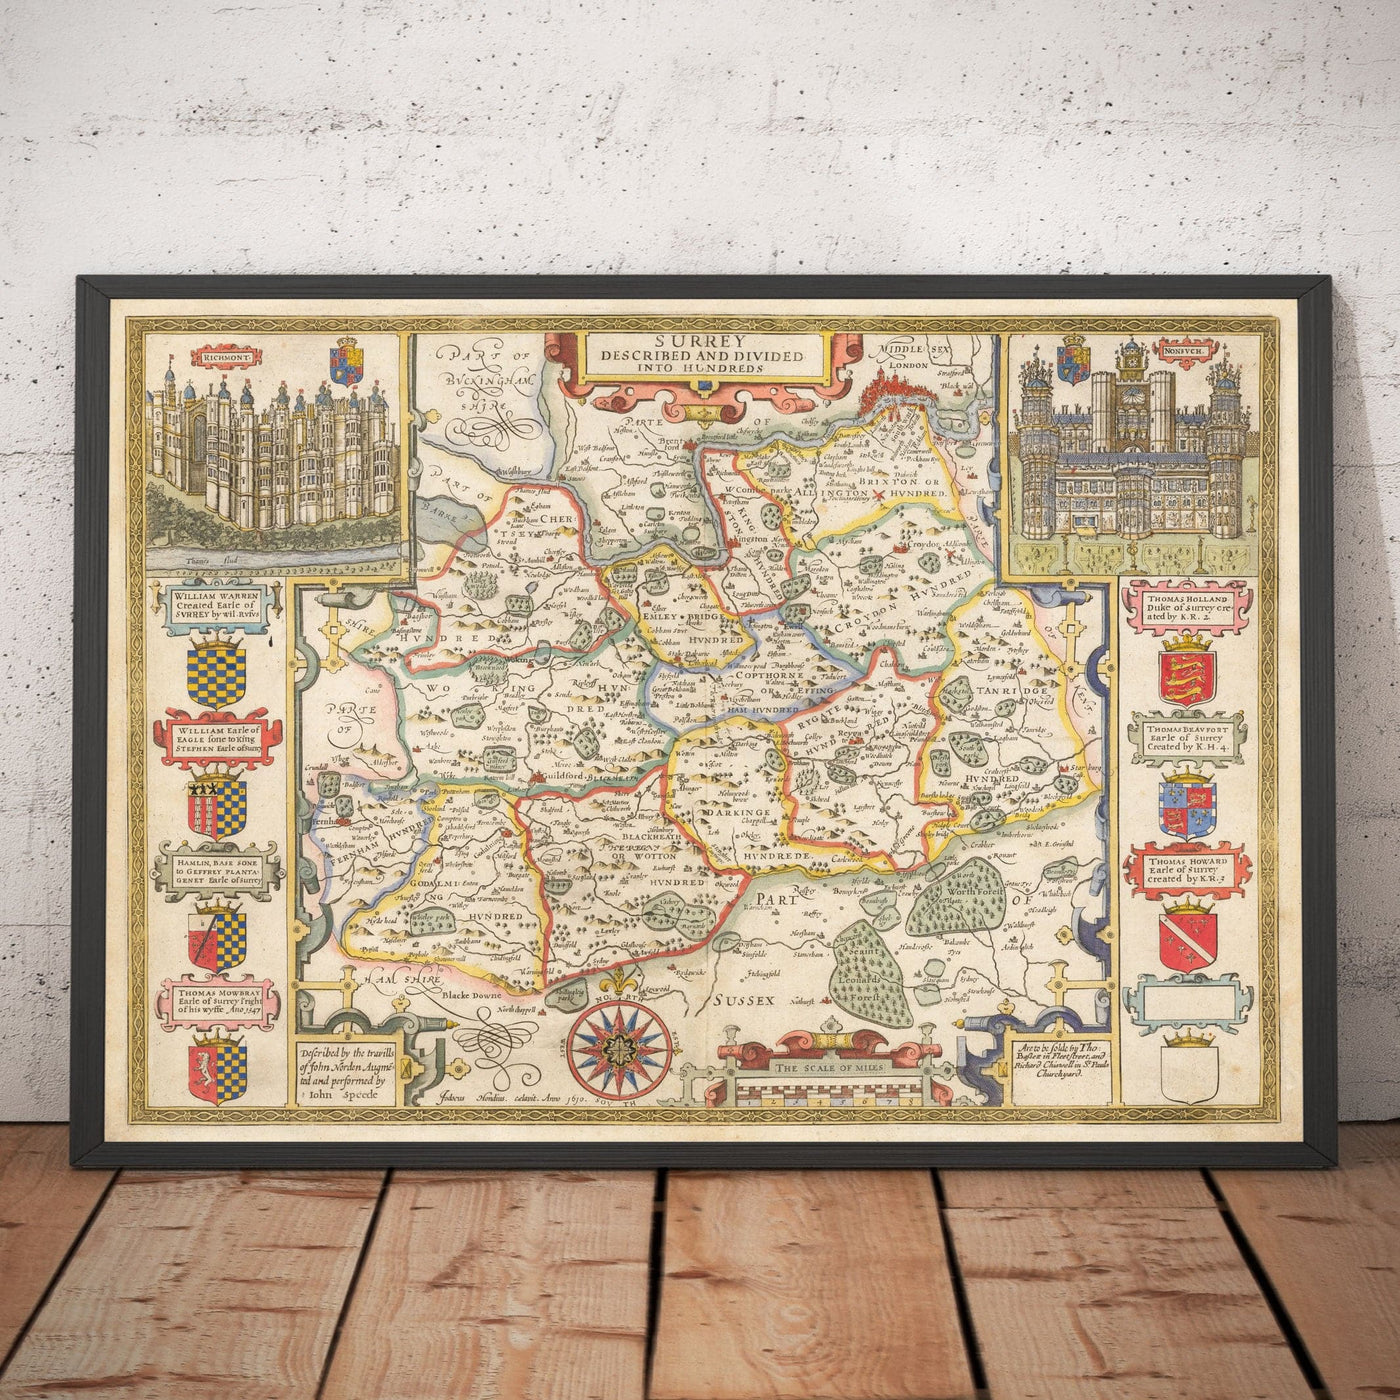 Antiguo mapa de Surrey 1611 por John Speed - Woking, Guildford, Croydon, Richmond, Esher, Cobham, Sutton, Morden